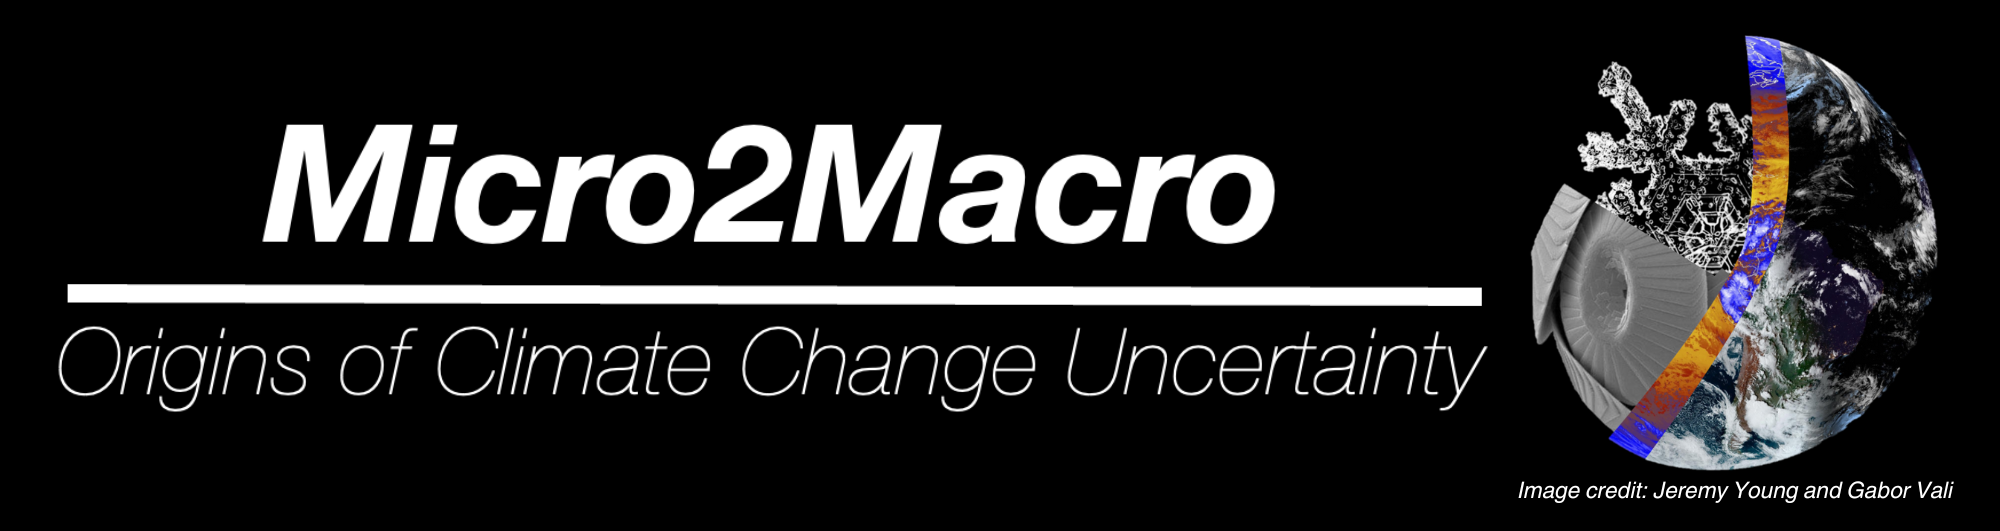 Micro2Macro: Origins of Climate Change Uncertainty Workshop Banner